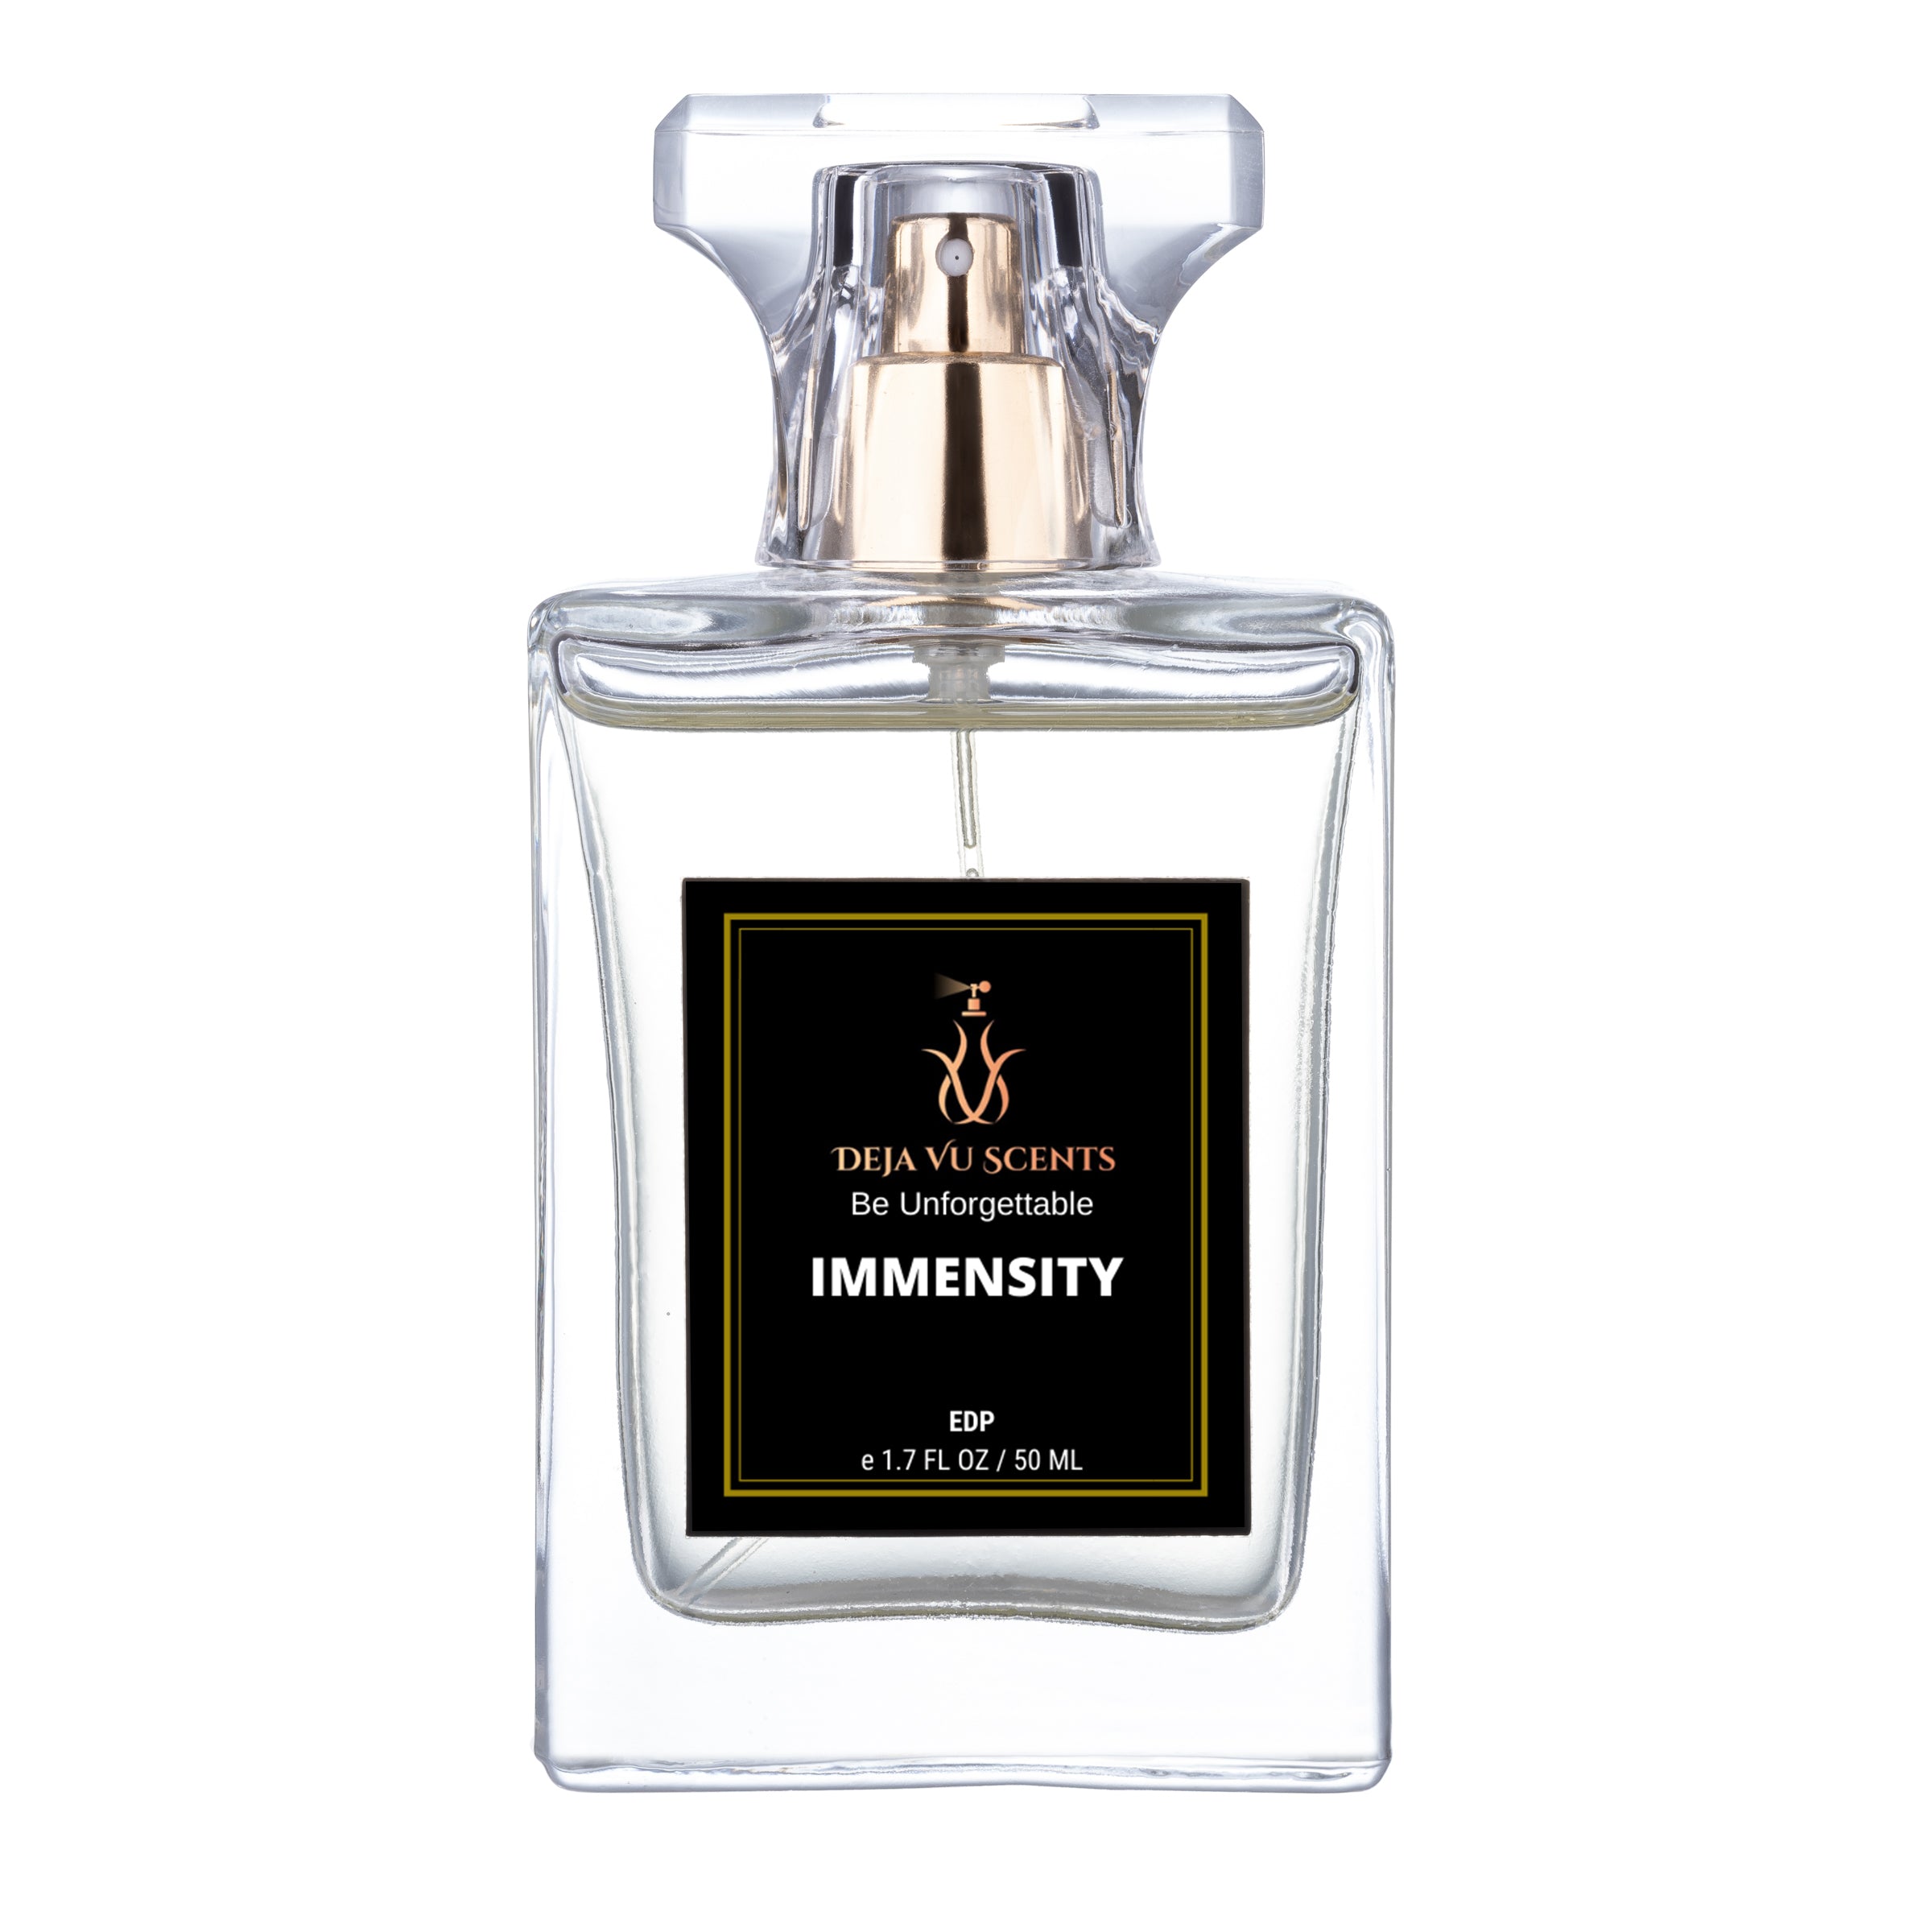 Louis Vuitton's L'Immensité Perfume Impression: Aromatic Ginger